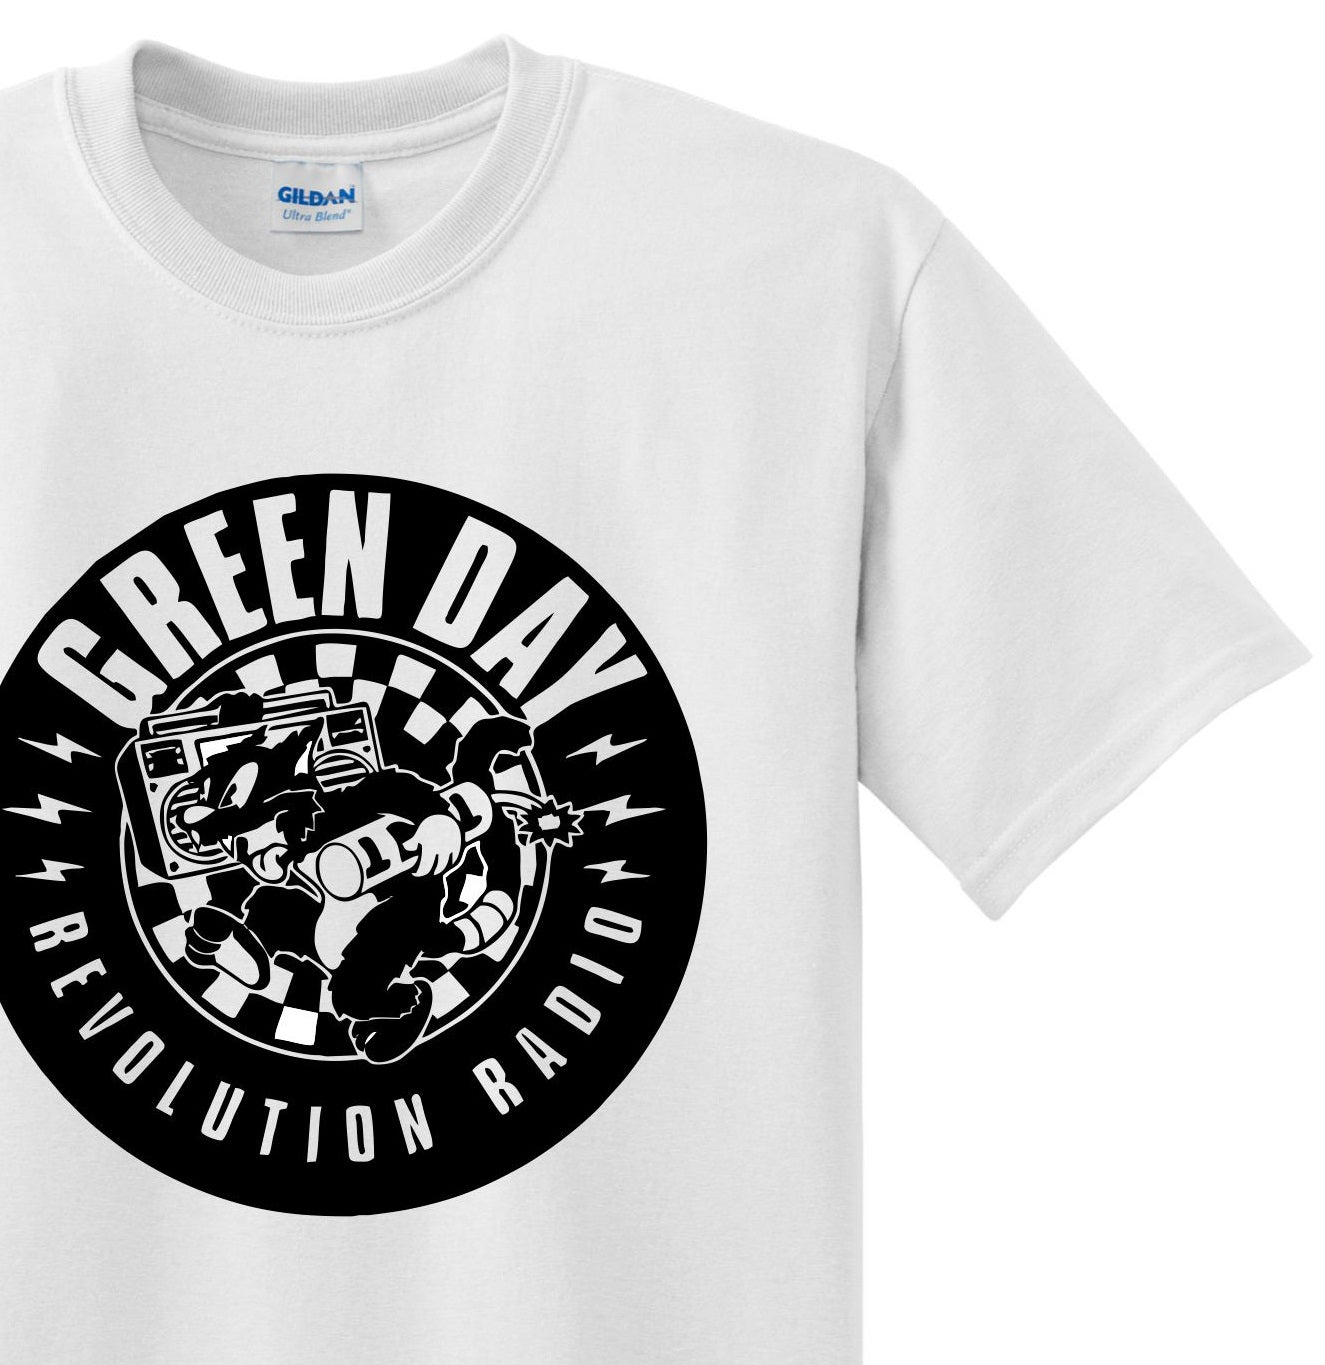 Radical Band  Men's Shirts - Green Day (White) - MYSTYLEMYCLOTHING